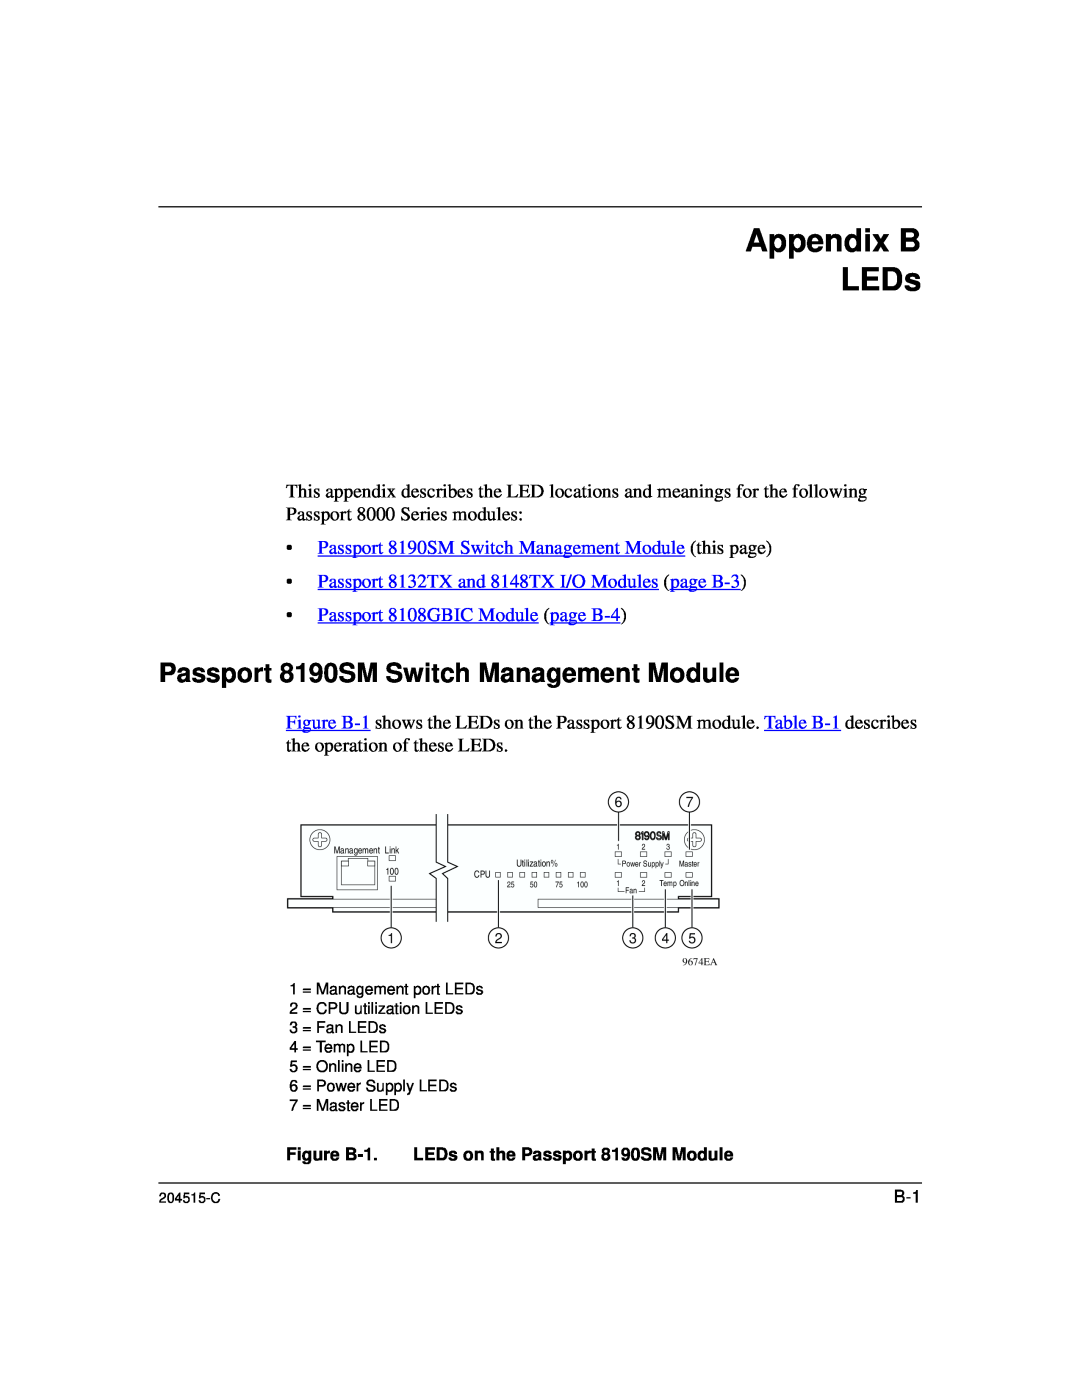 Nortel Networks 1000BASE-XD Appendix B LEDs, Passport 8190SM Switch Management Module, Passport 8108GBIC Module page B-4 